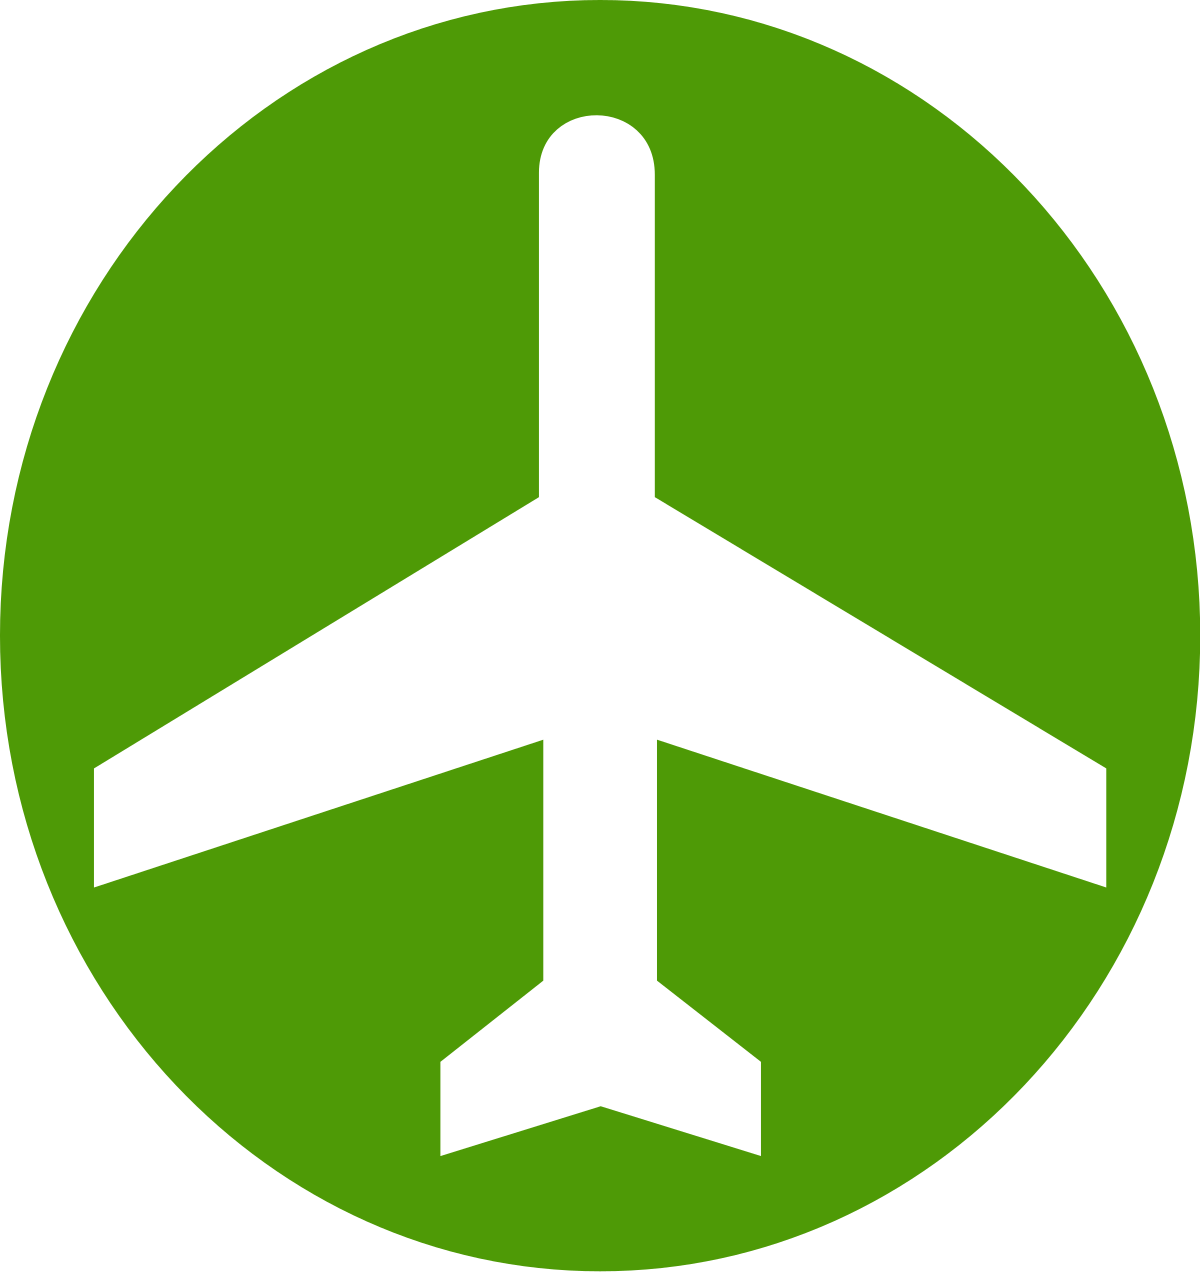 Airplane mode symbol